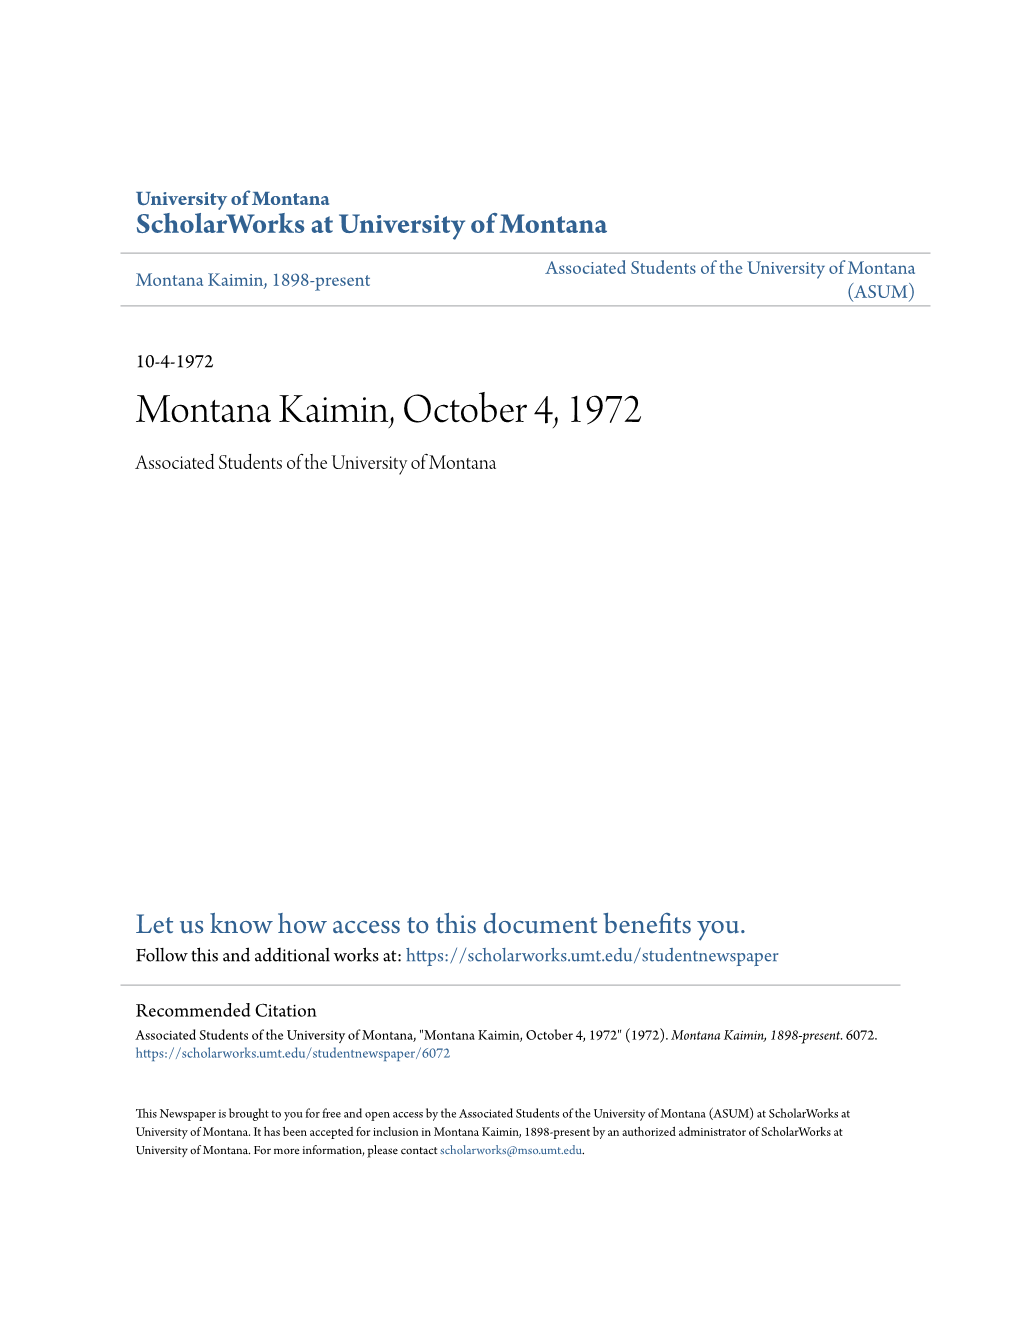 Montana Kaimin, October 4, 1972 Associated Students of the University of Montana